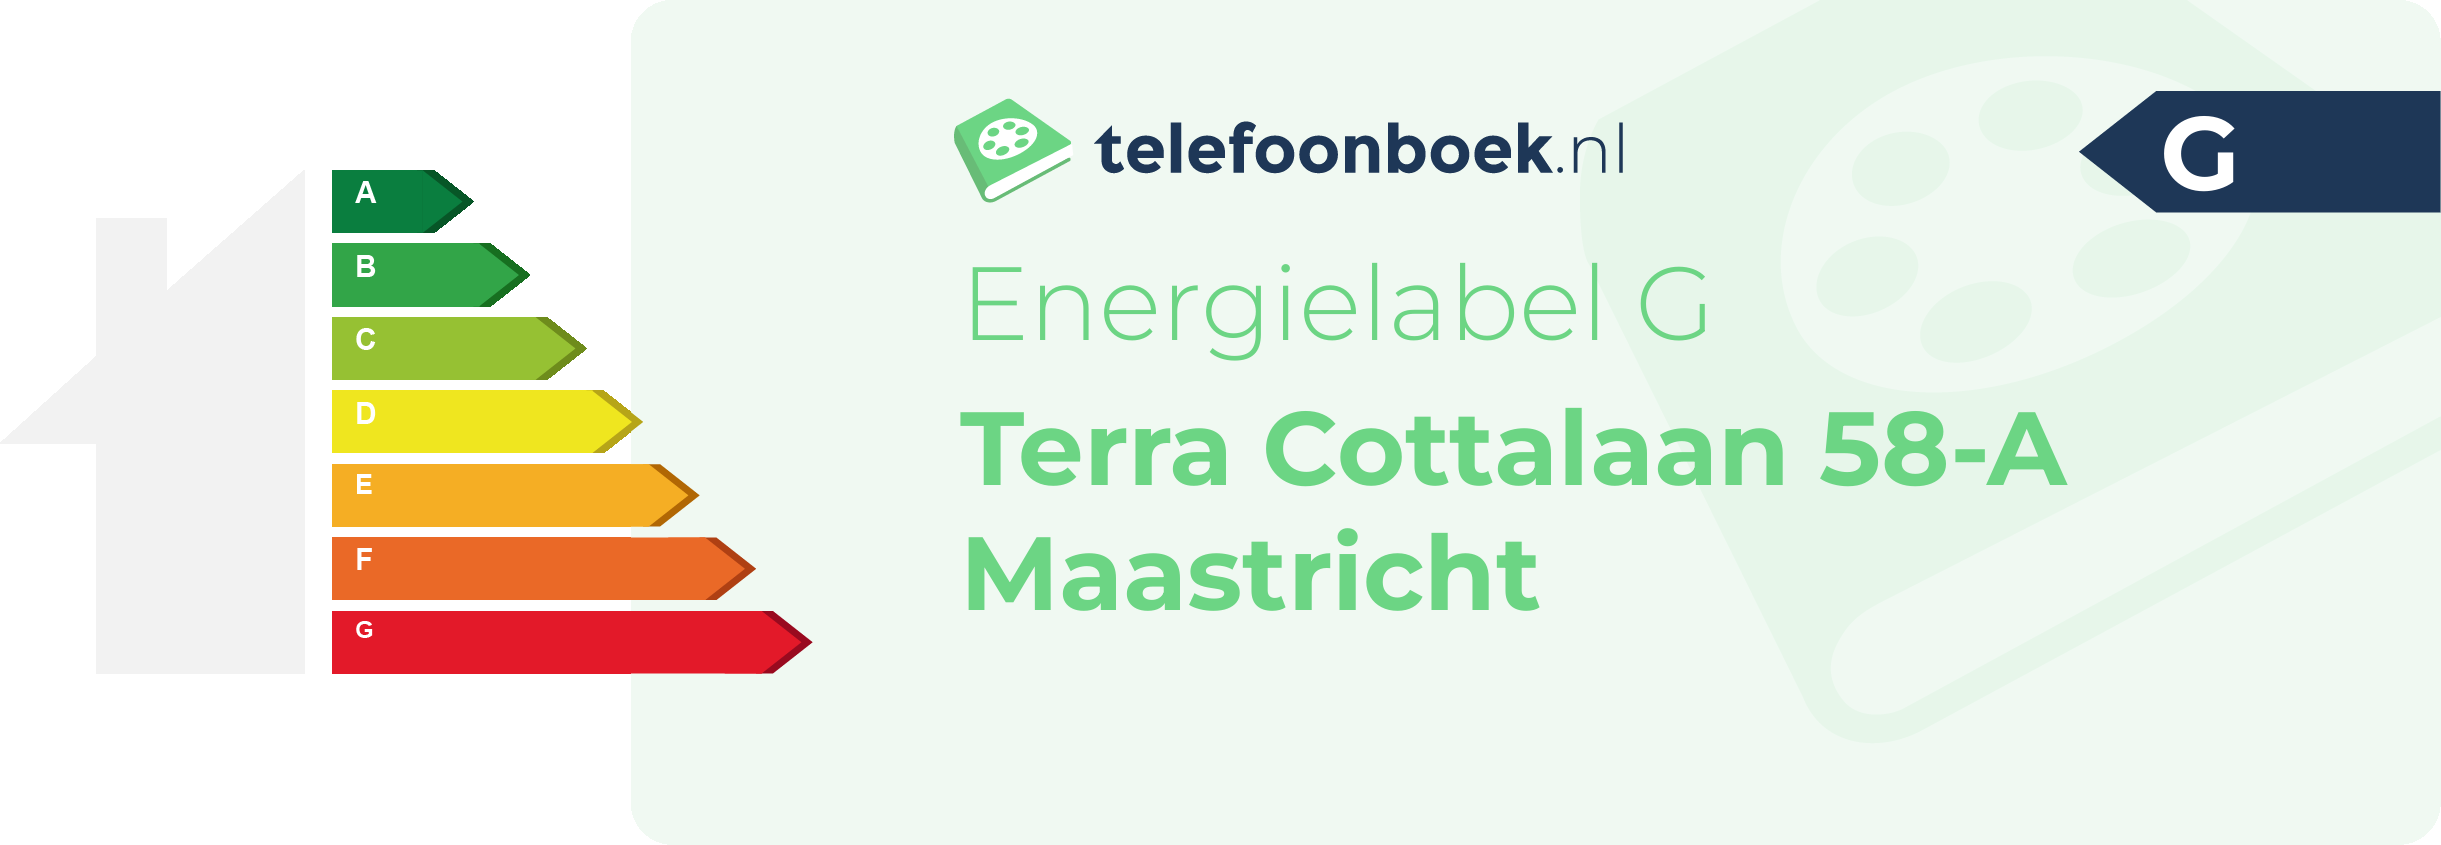 Energielabel Terra Cottalaan 58-A Maastricht